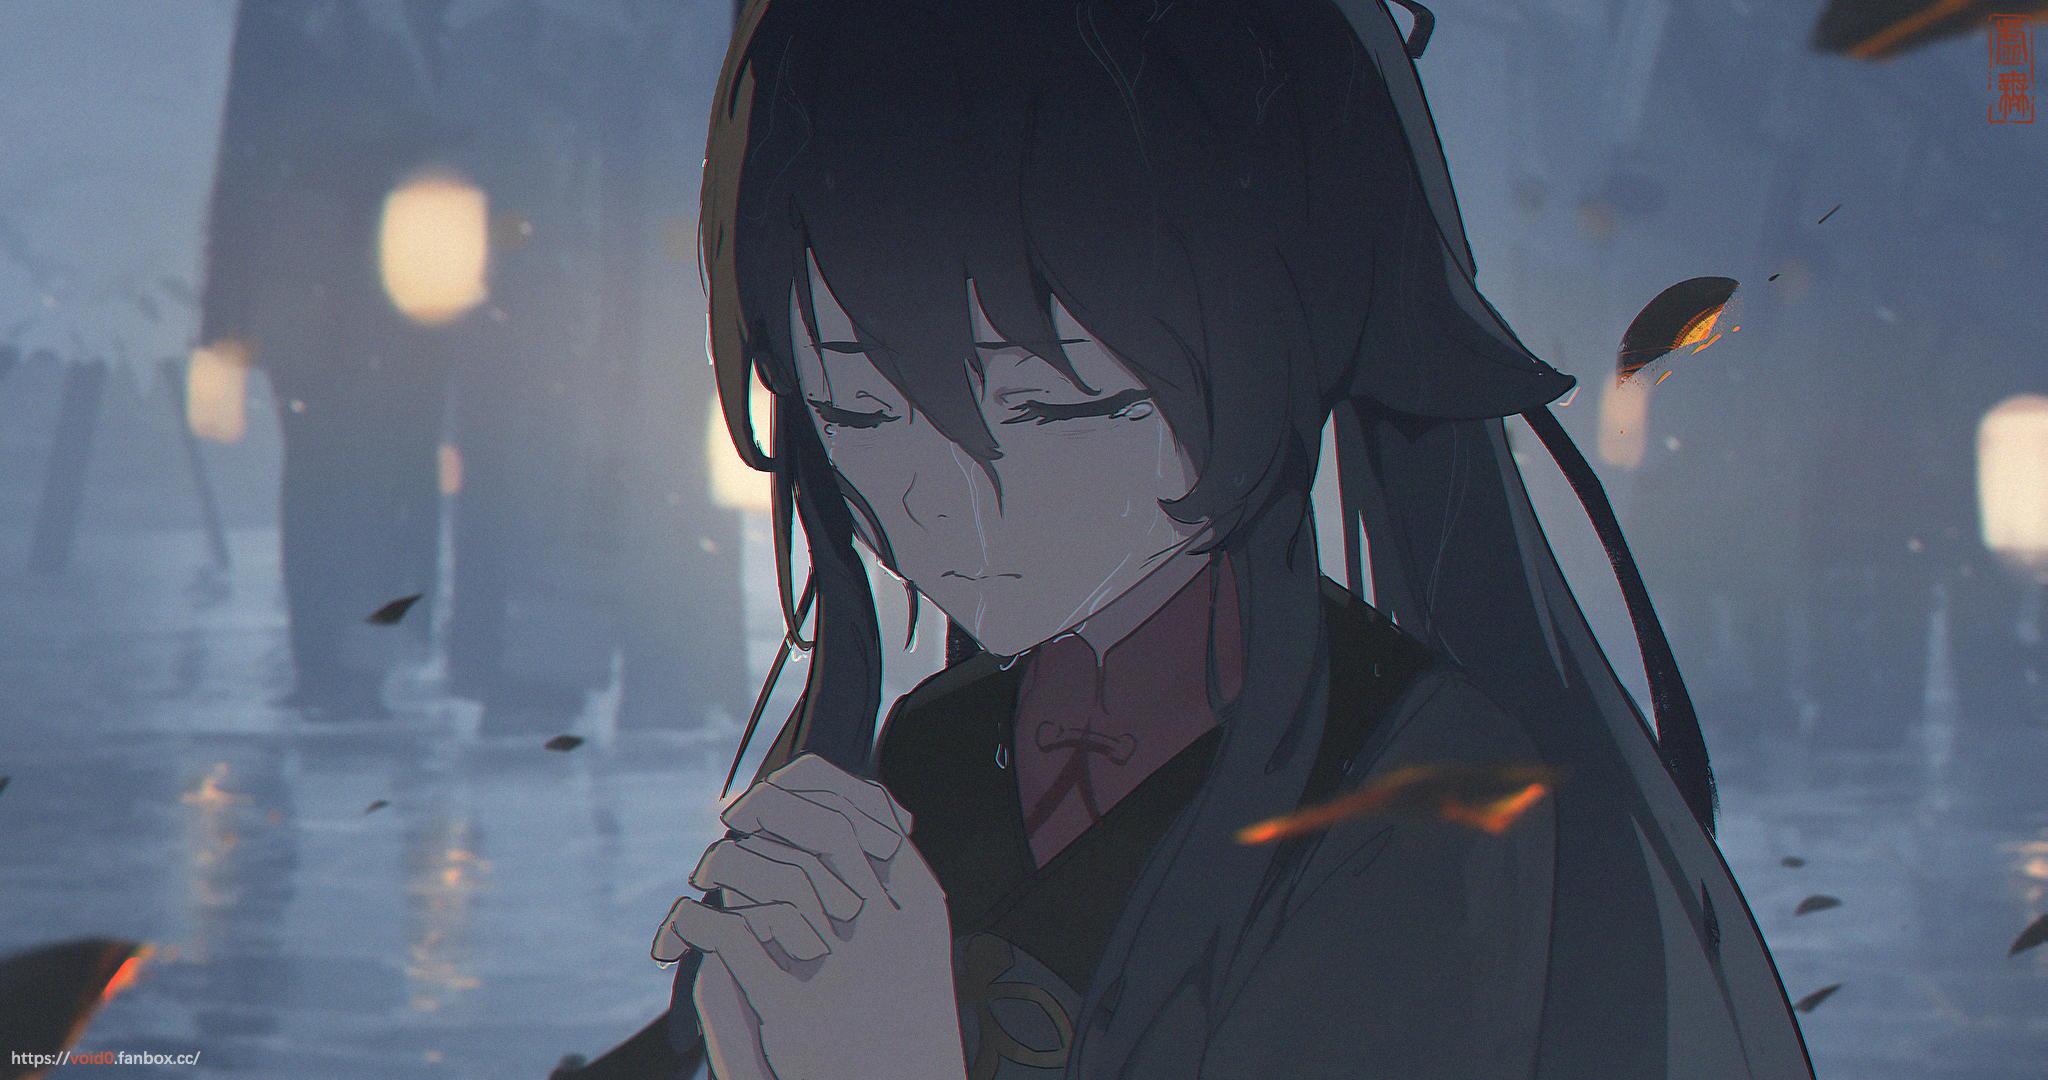 Prayer - Fate Stay Night & Anime Background Wallpapers on Desktop Nexus  (Image 635220)